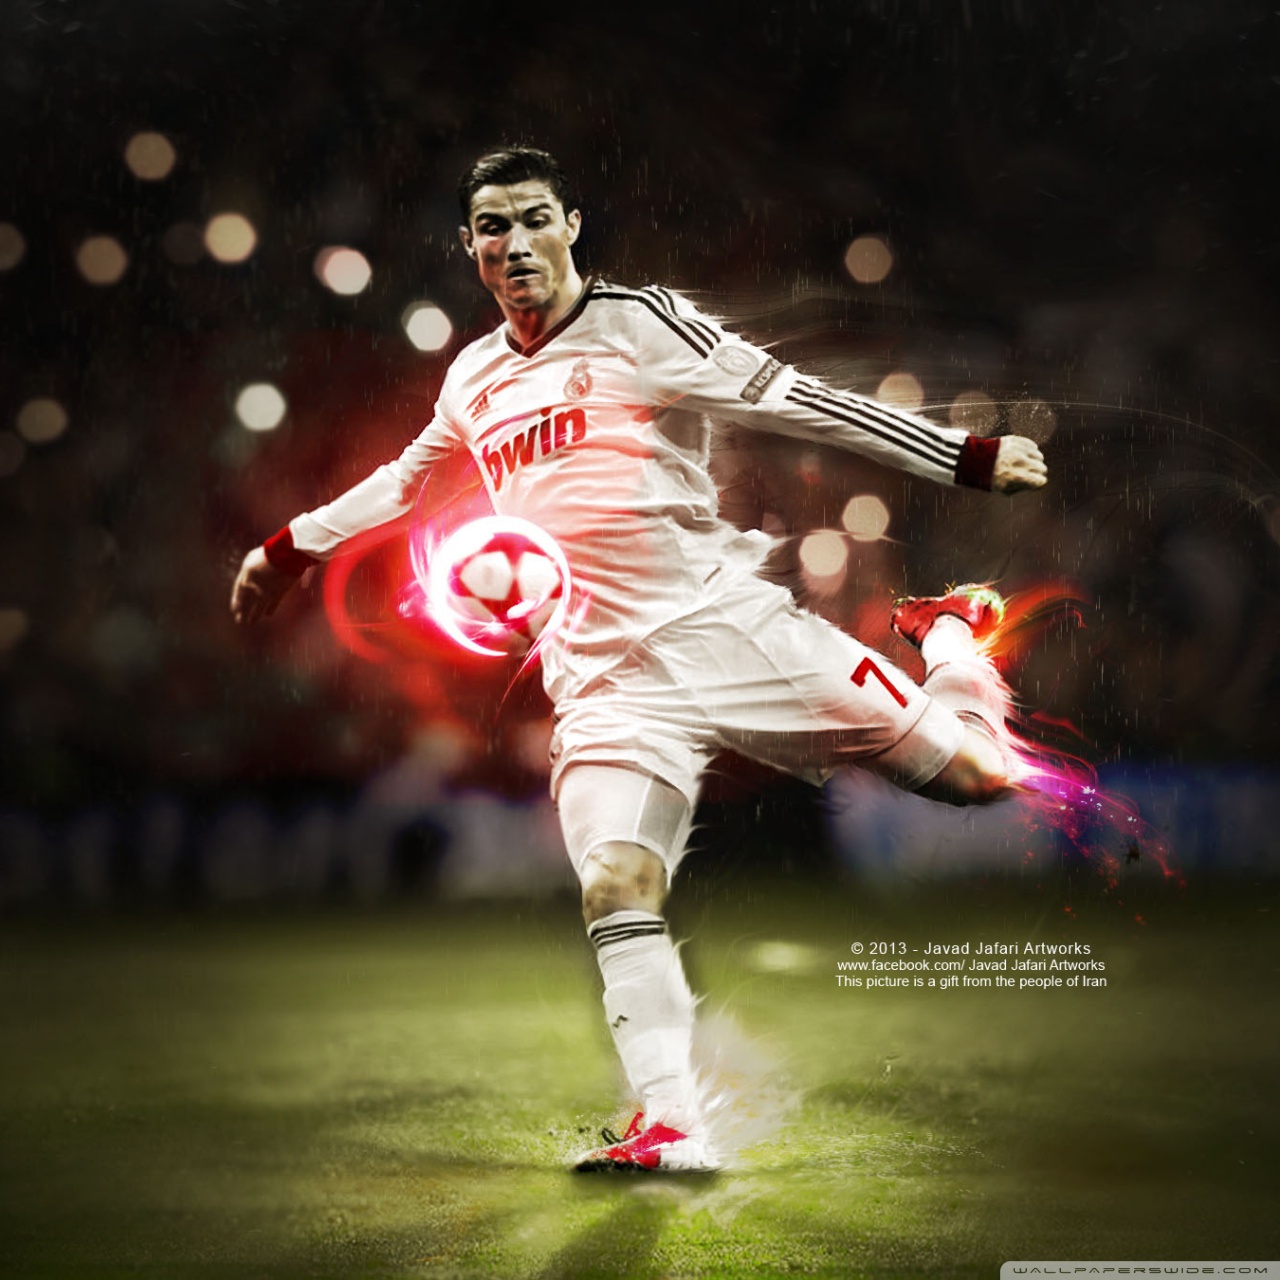 Cristiano Ronaldo Images Hd - 1280x1280 Wallpaper 